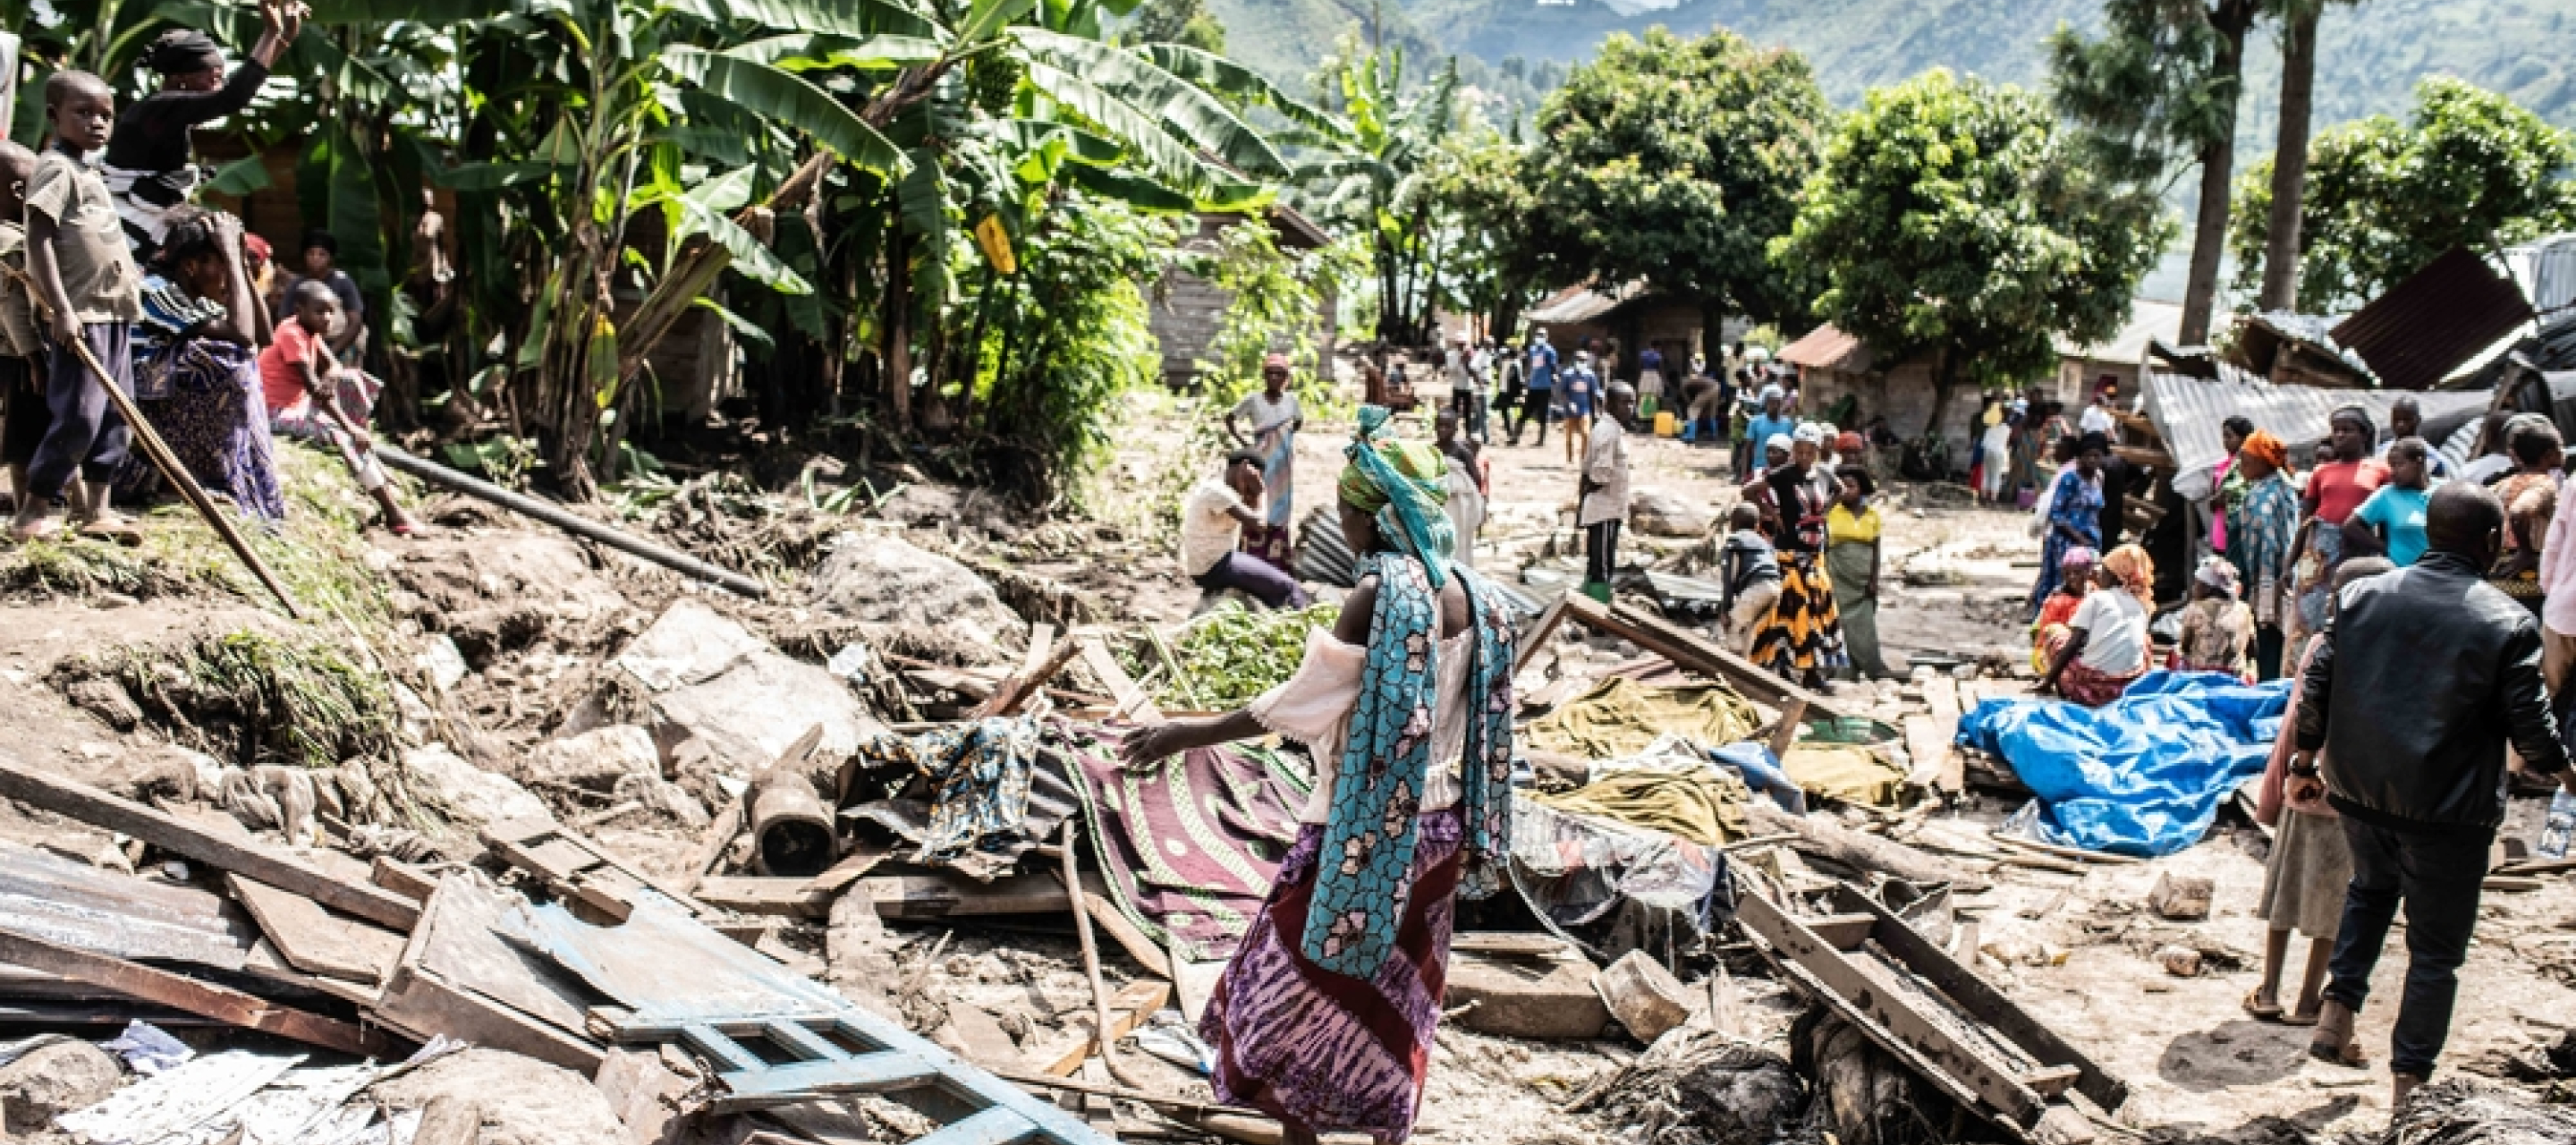 Naturkatastrophe in der Demokratischen Republik Kongo